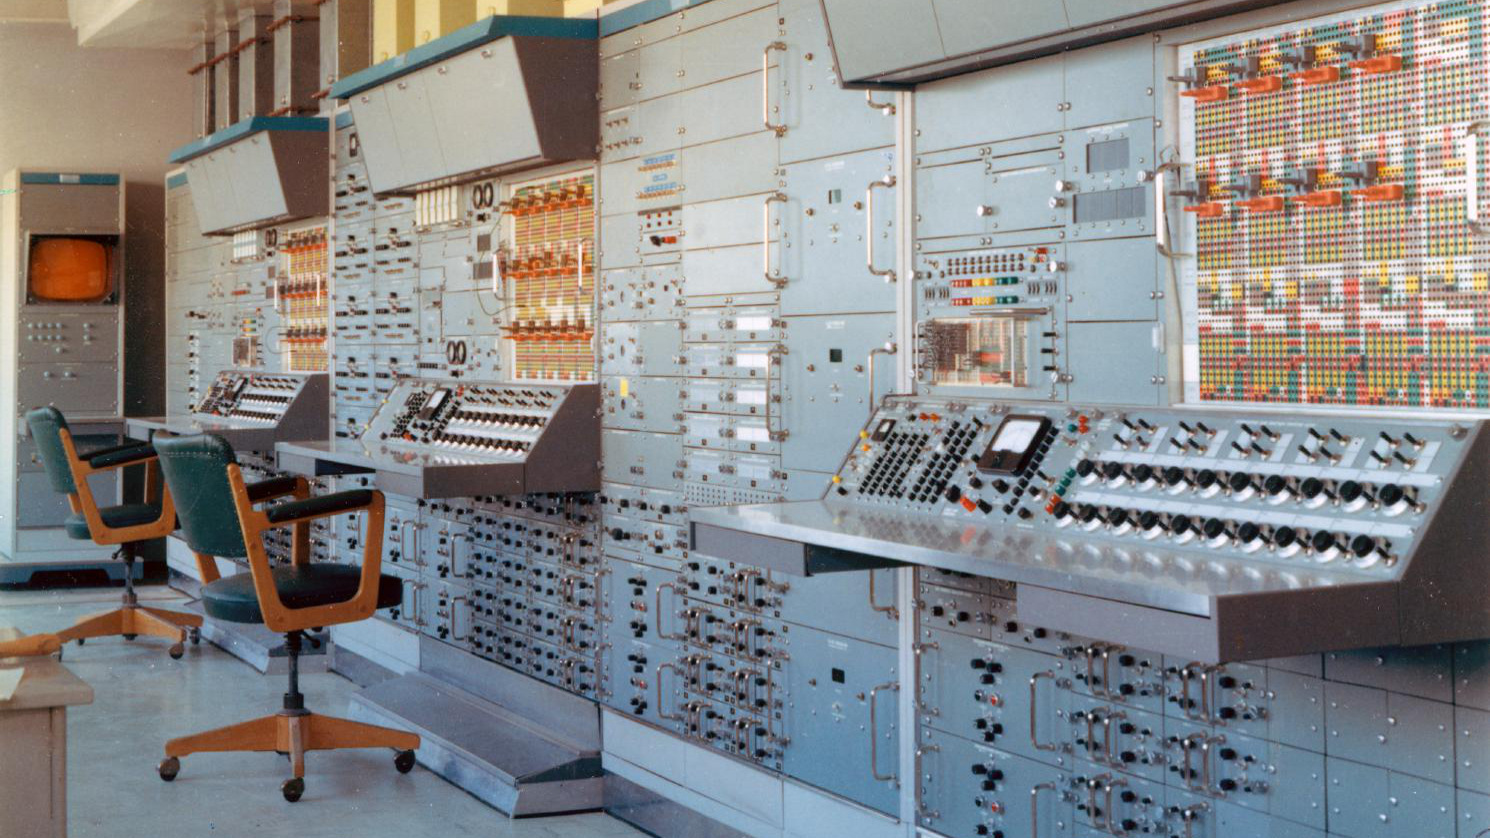 EAI analog computer installation at the German Aerospace Center